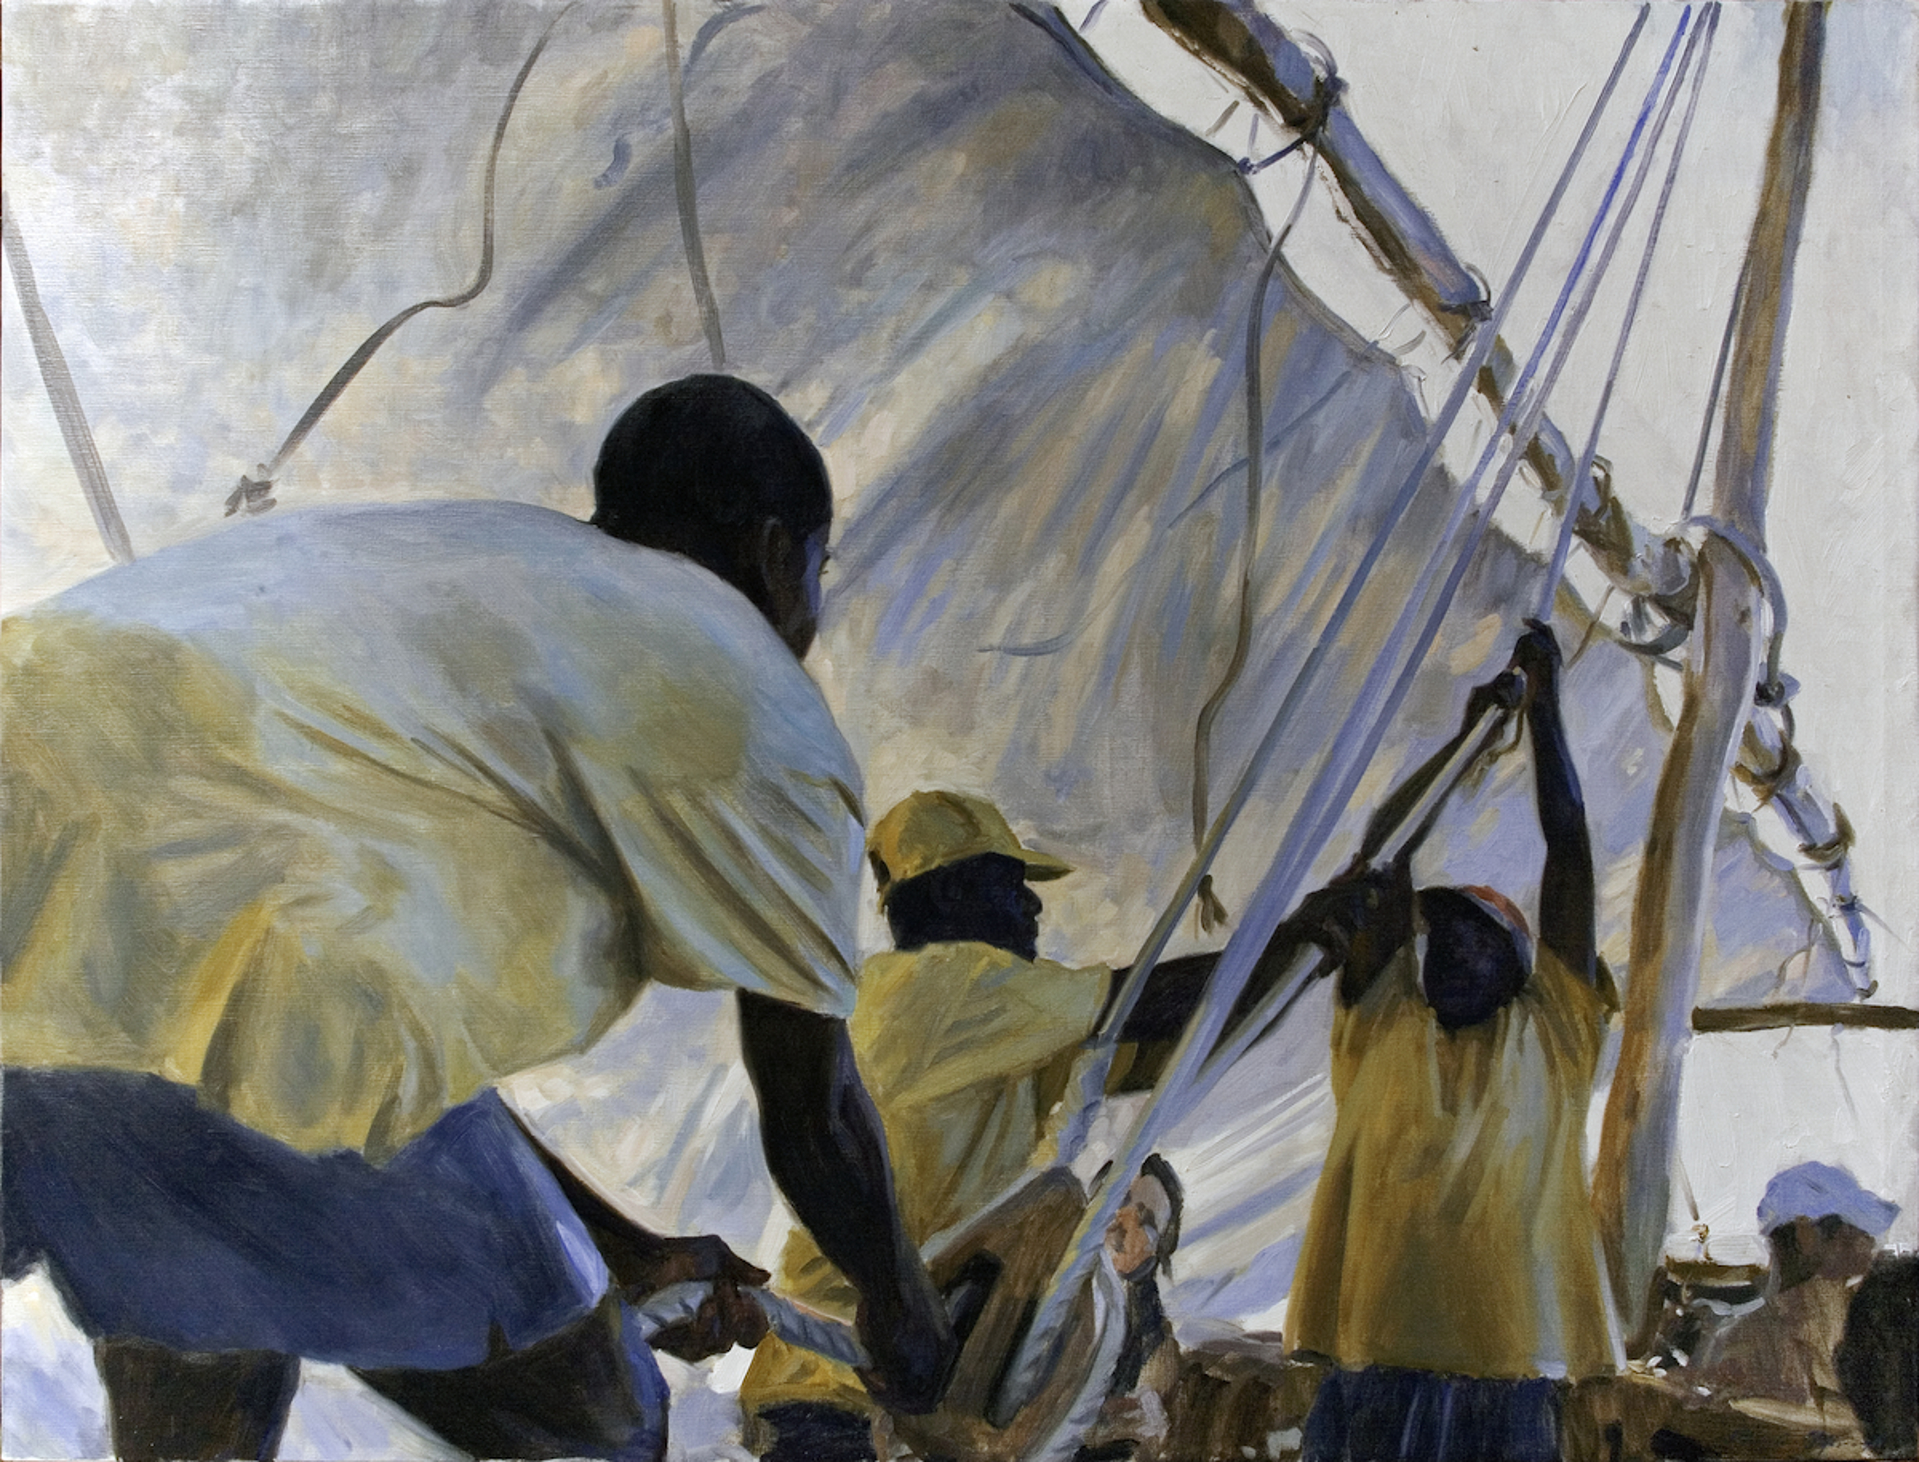 Raising the Sails by Paul G. Oxborough